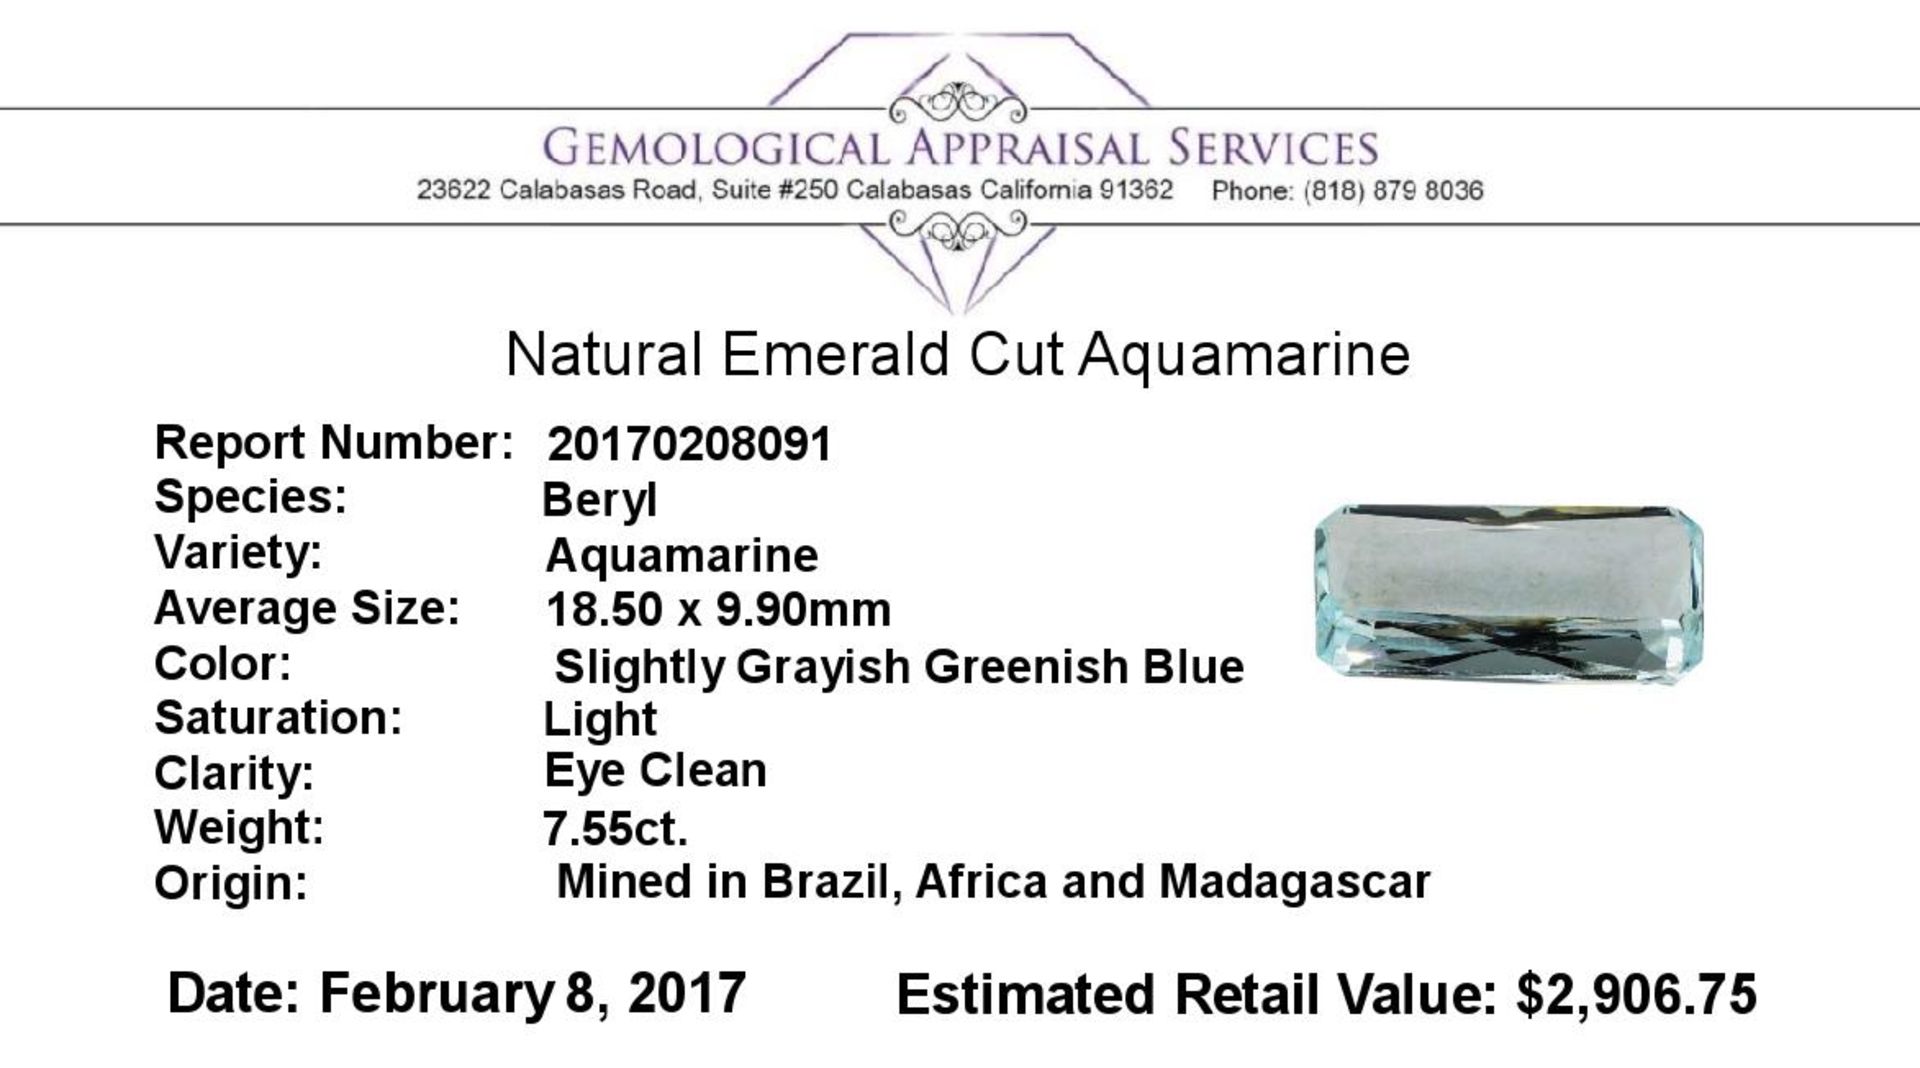 7.55 ct.Natural Emerald Cut Aquamarine - Image 2 of 2